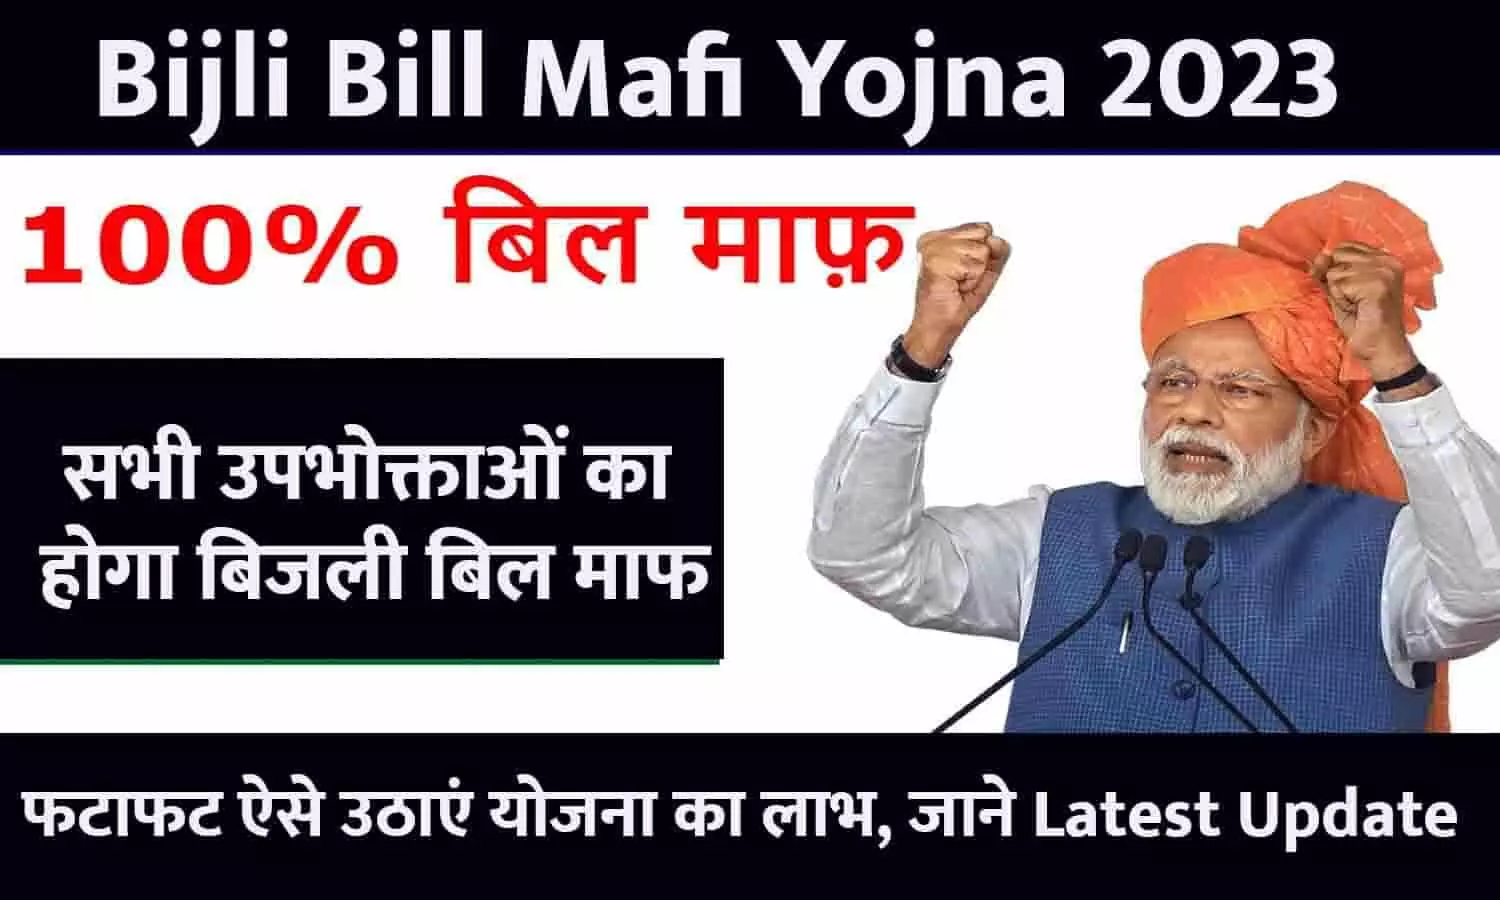 Bijli Bill Mafi Yojna In Hindi 2023: सभी उपभोक्ताओं का होगा बिजली बिल माफ, फटाफट ऐसे उठाएं योजना का लाभ, जाने Latest Update